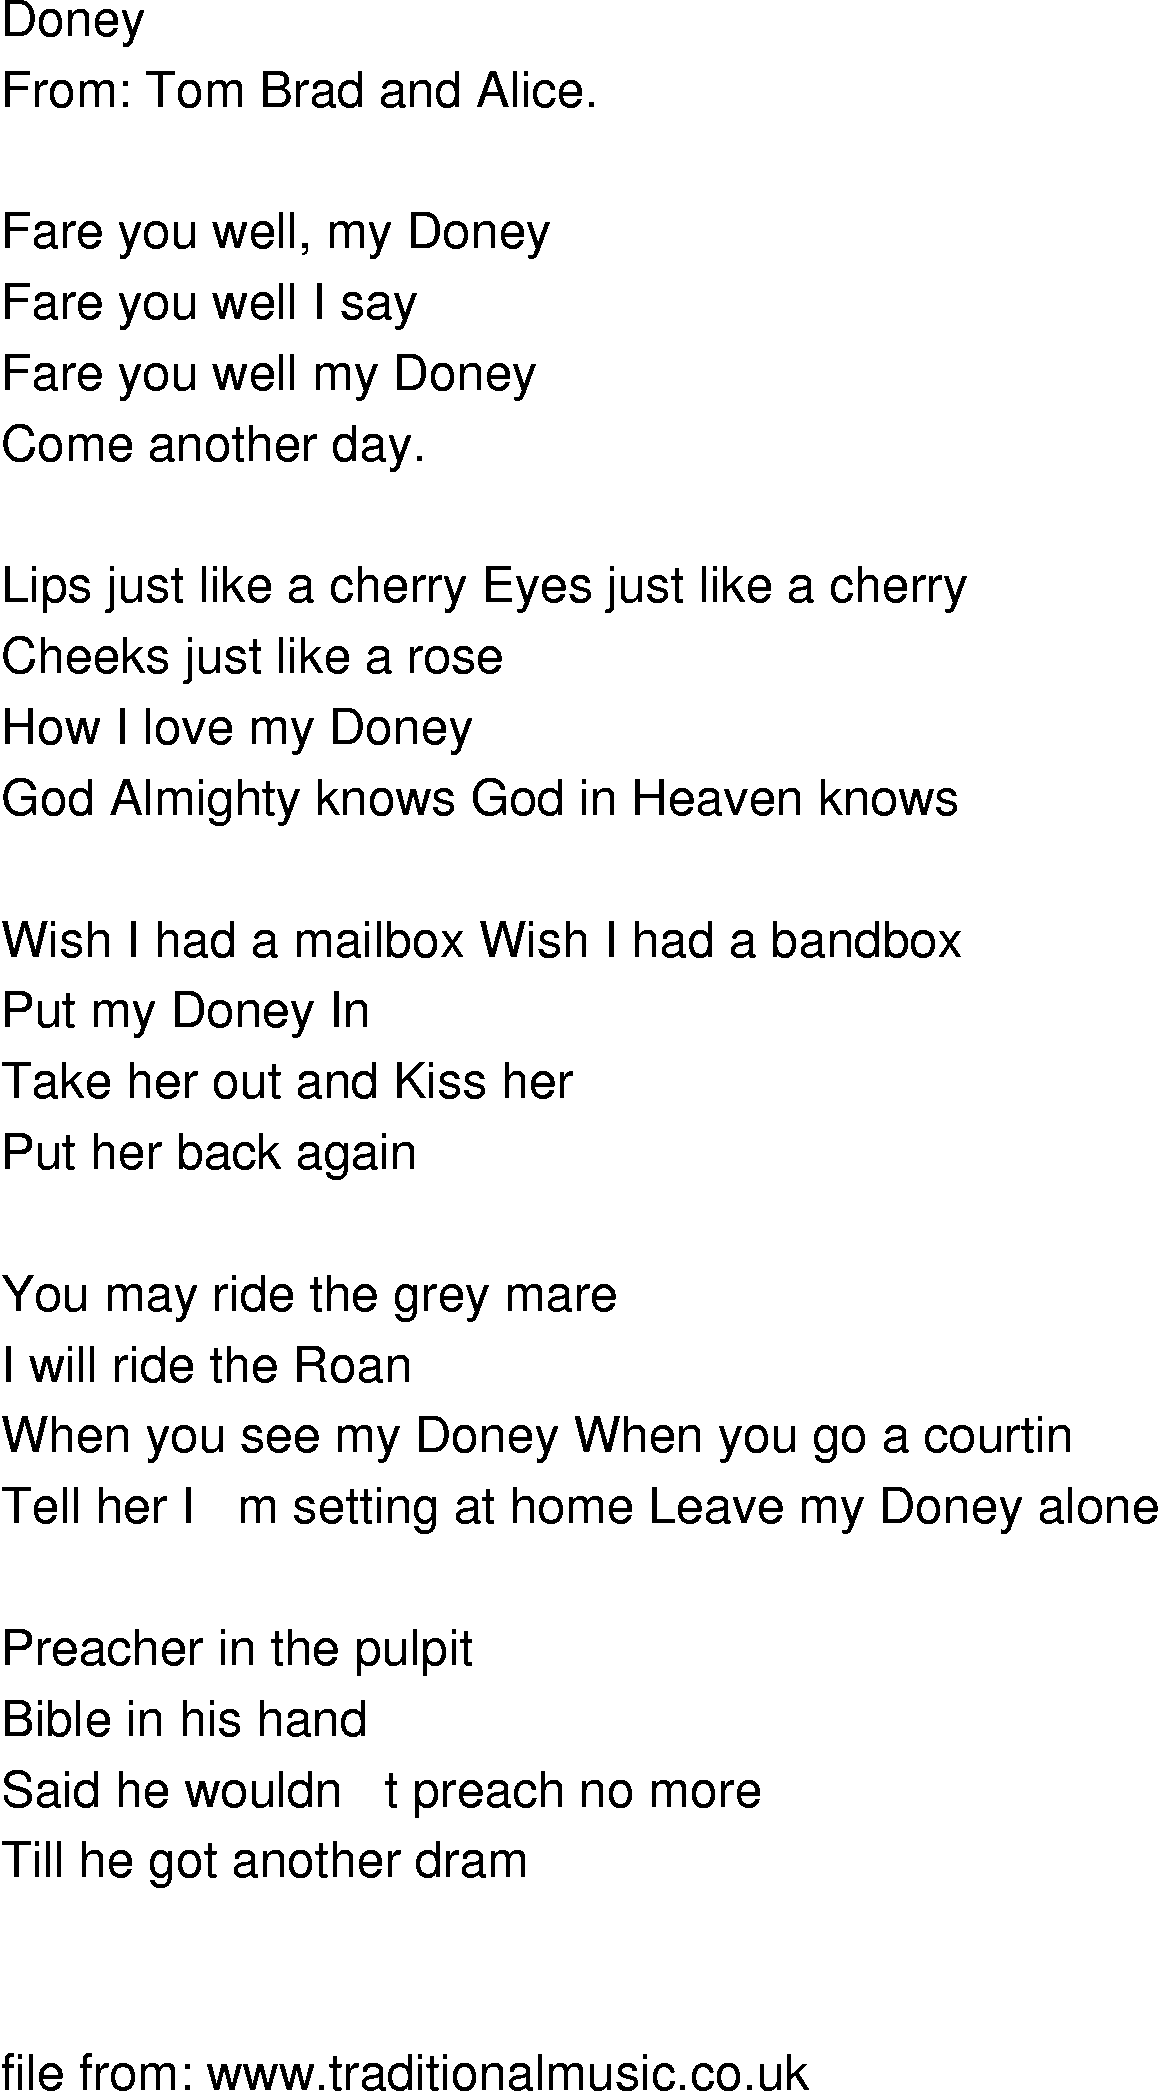 Old-Time (oldtimey) Song Lyrics - doney